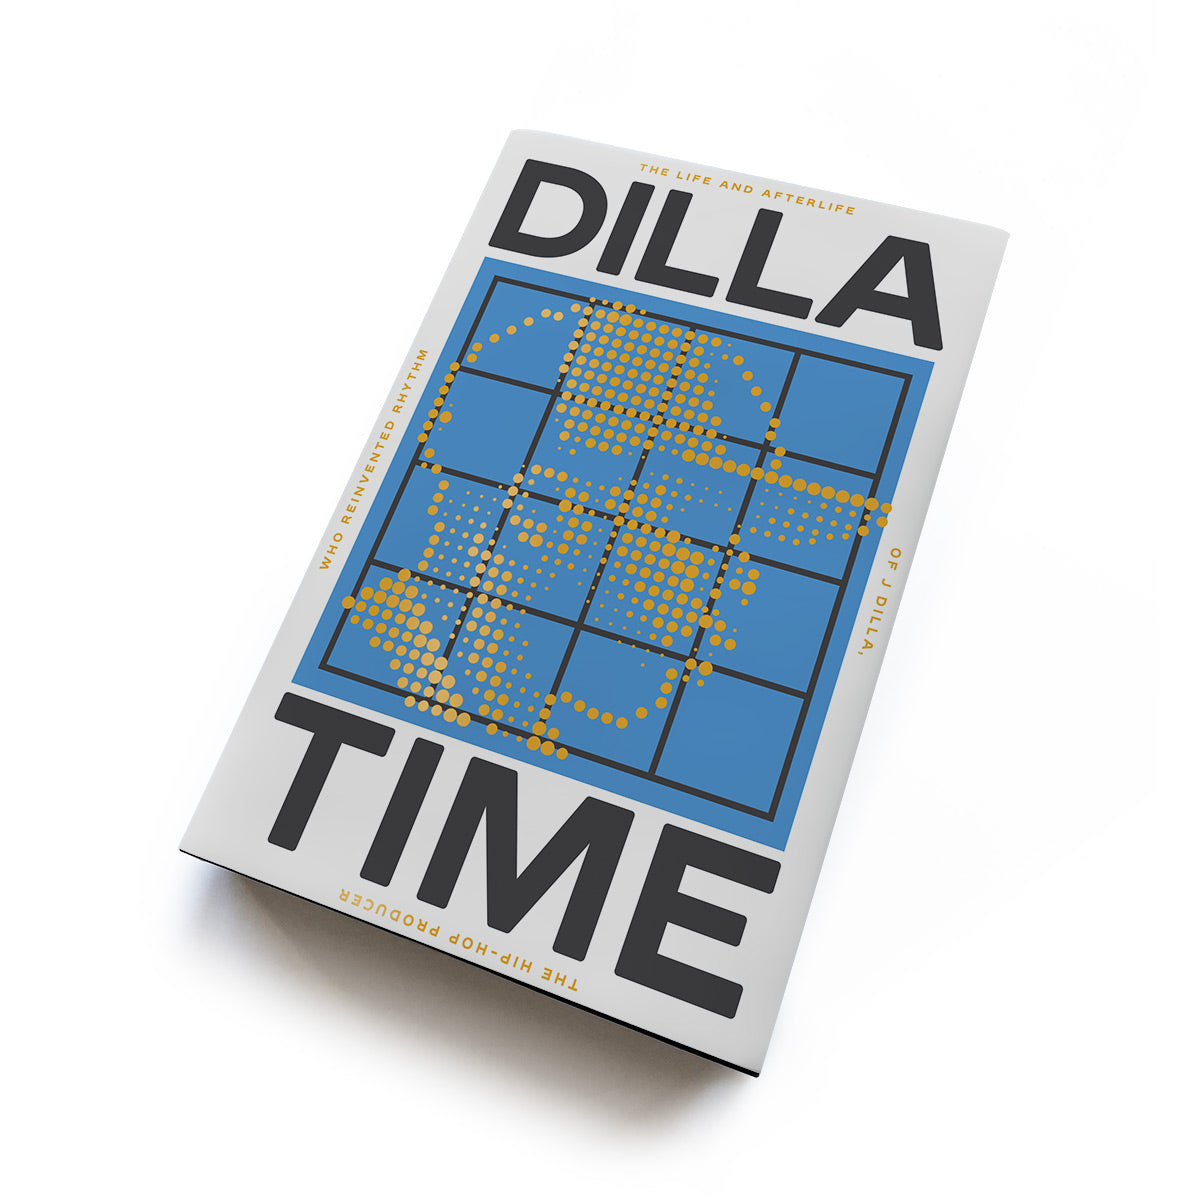 Dilla Time